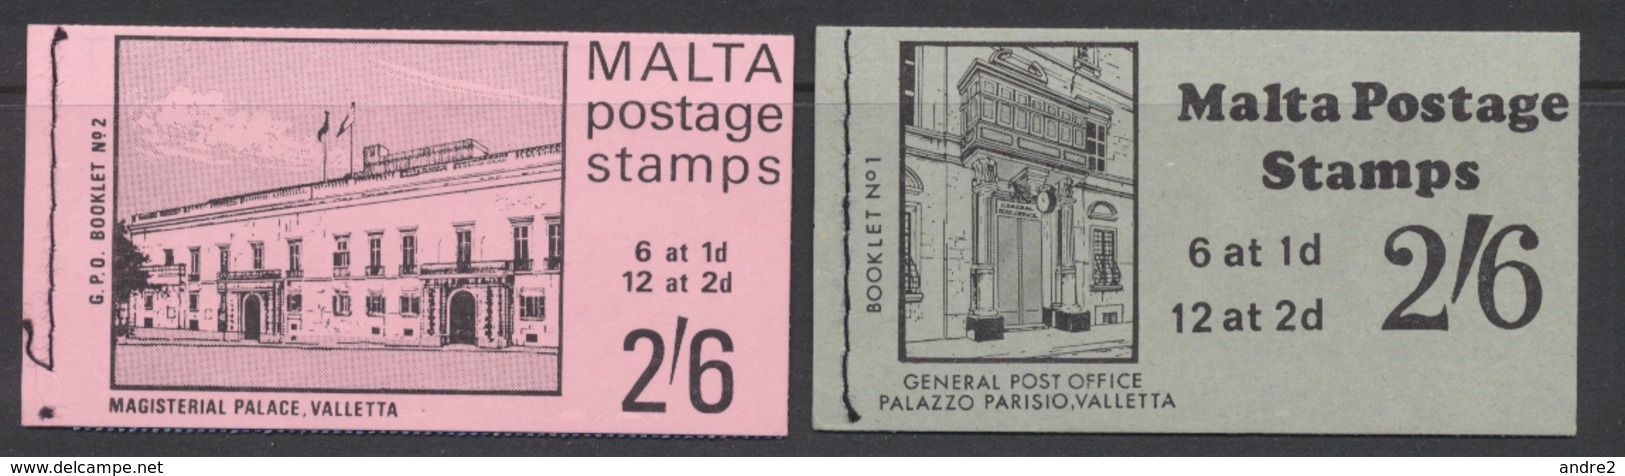 Malte - Malta 1970  Carnet - Booklet Magisterial Palace And Palazzo Parisio   *** MNH - Malta